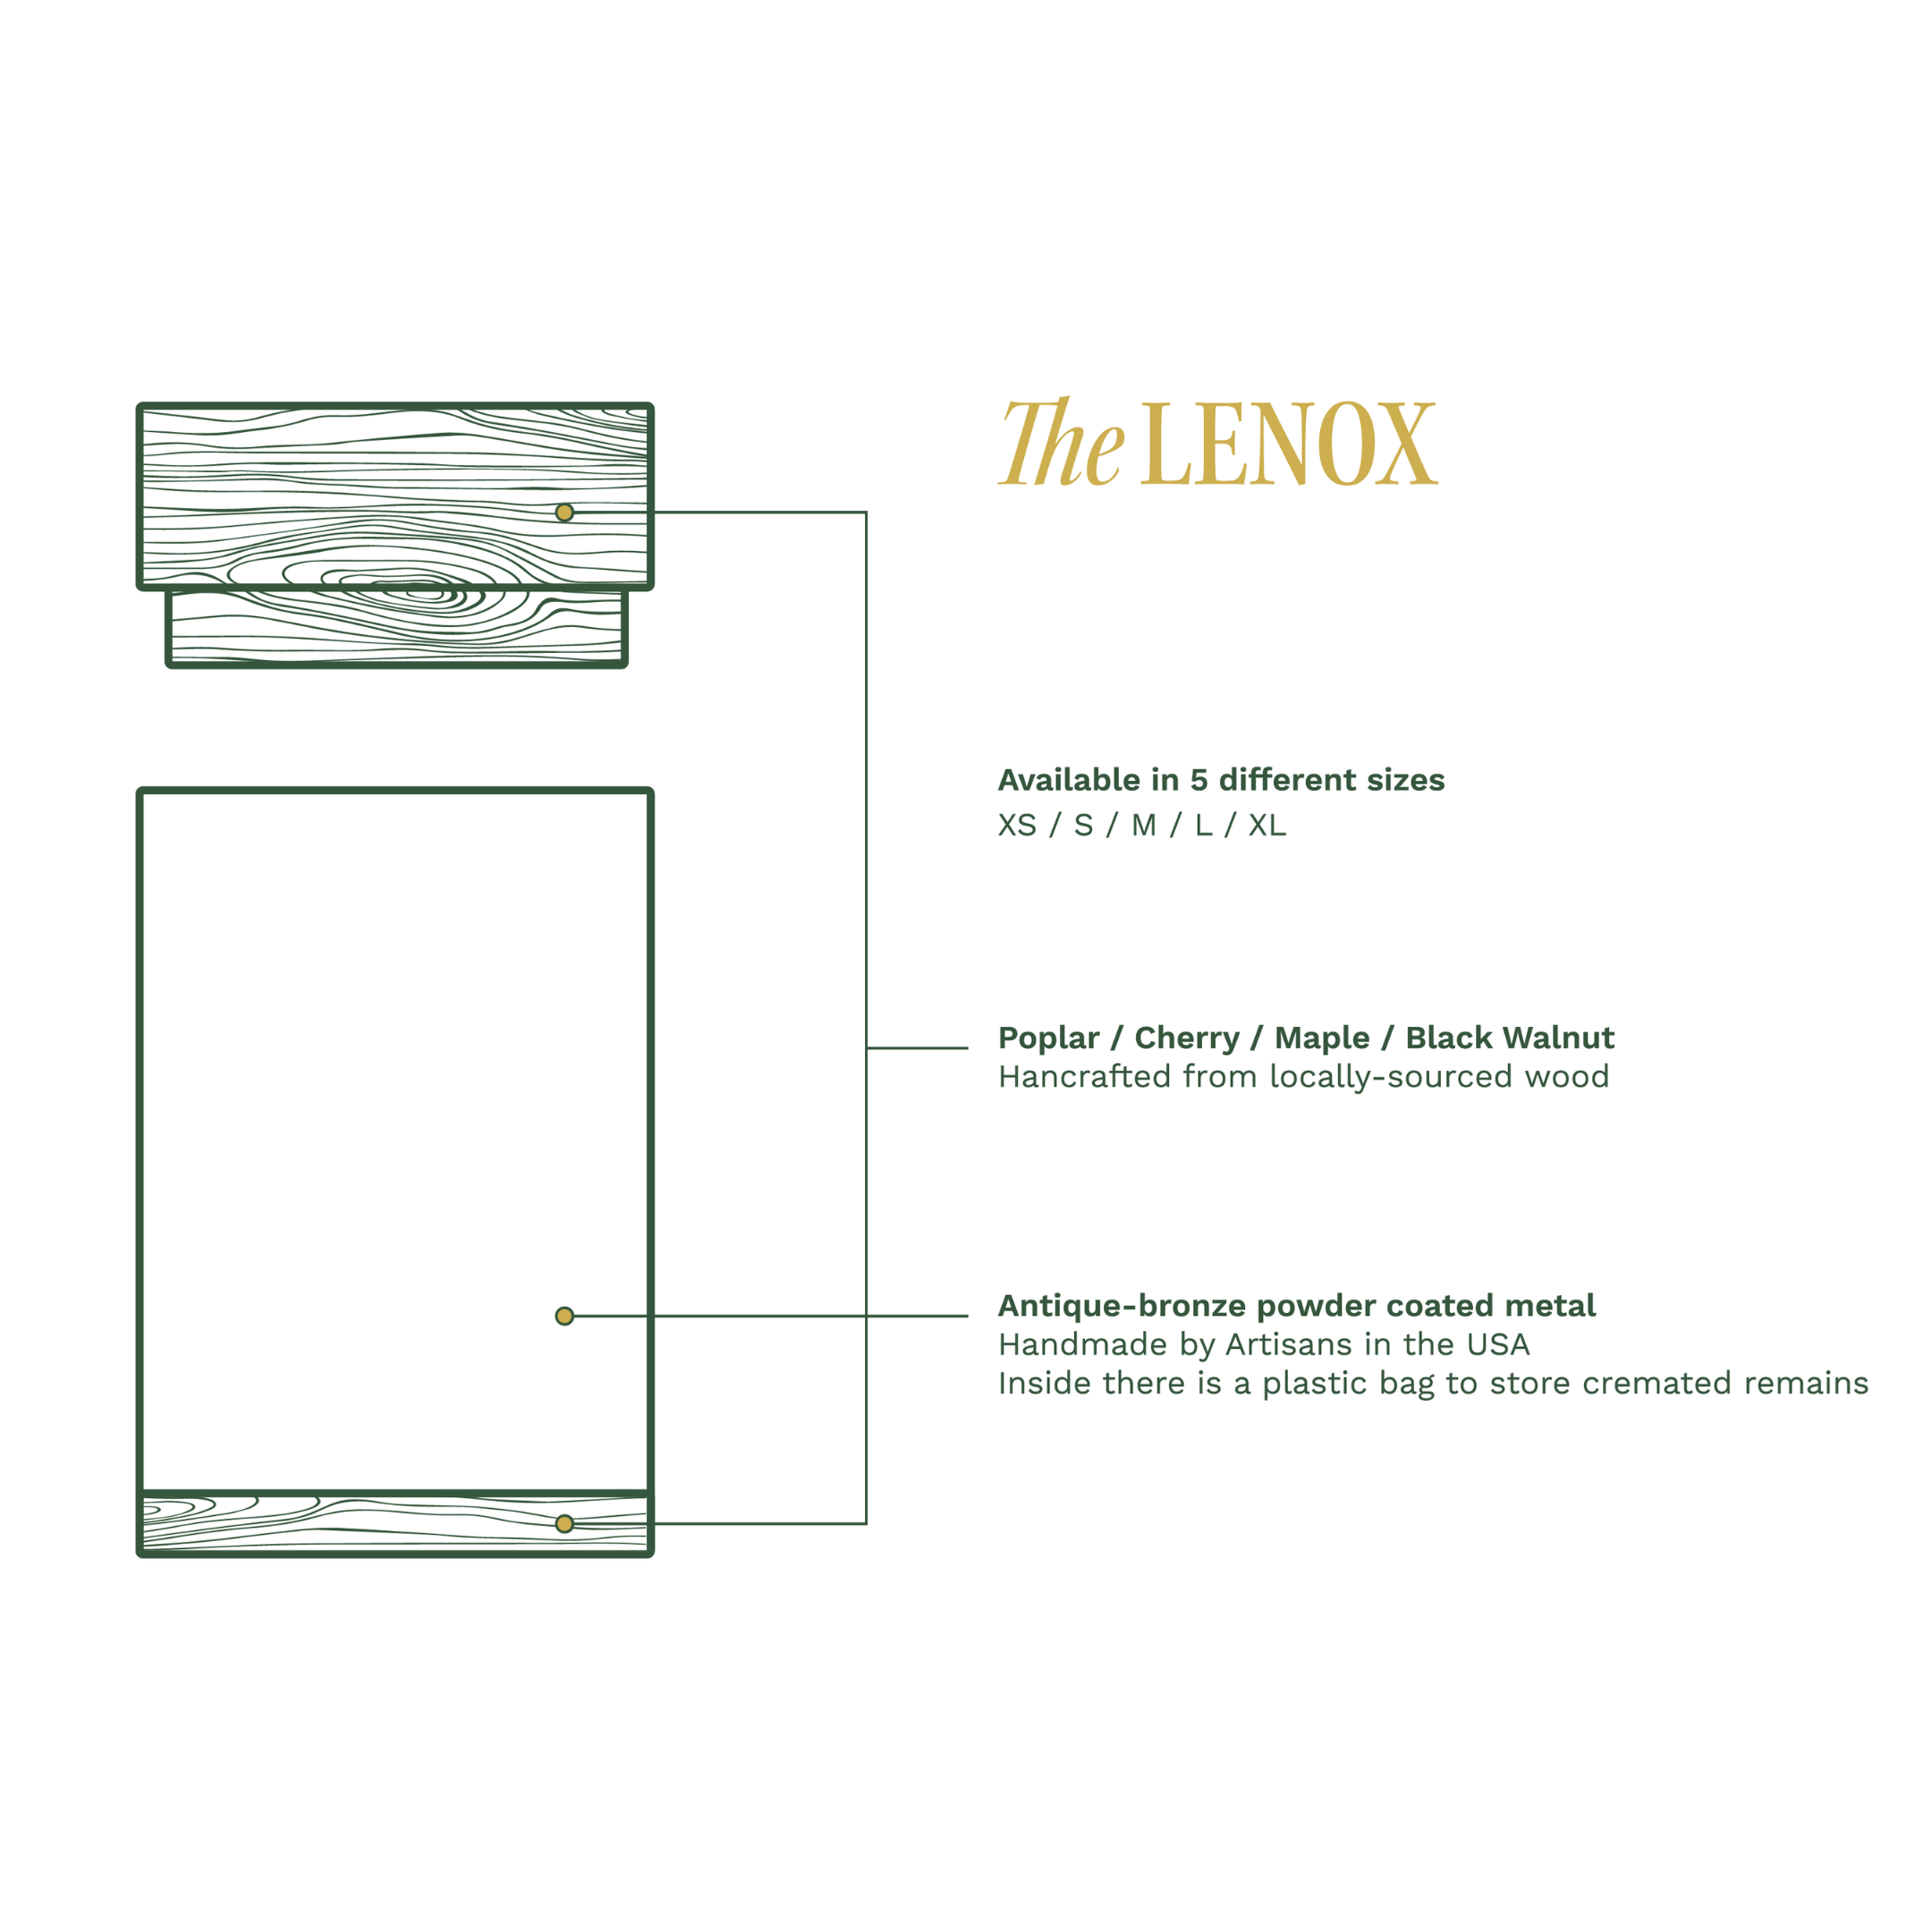 The Lenox Urn in Black Walnut